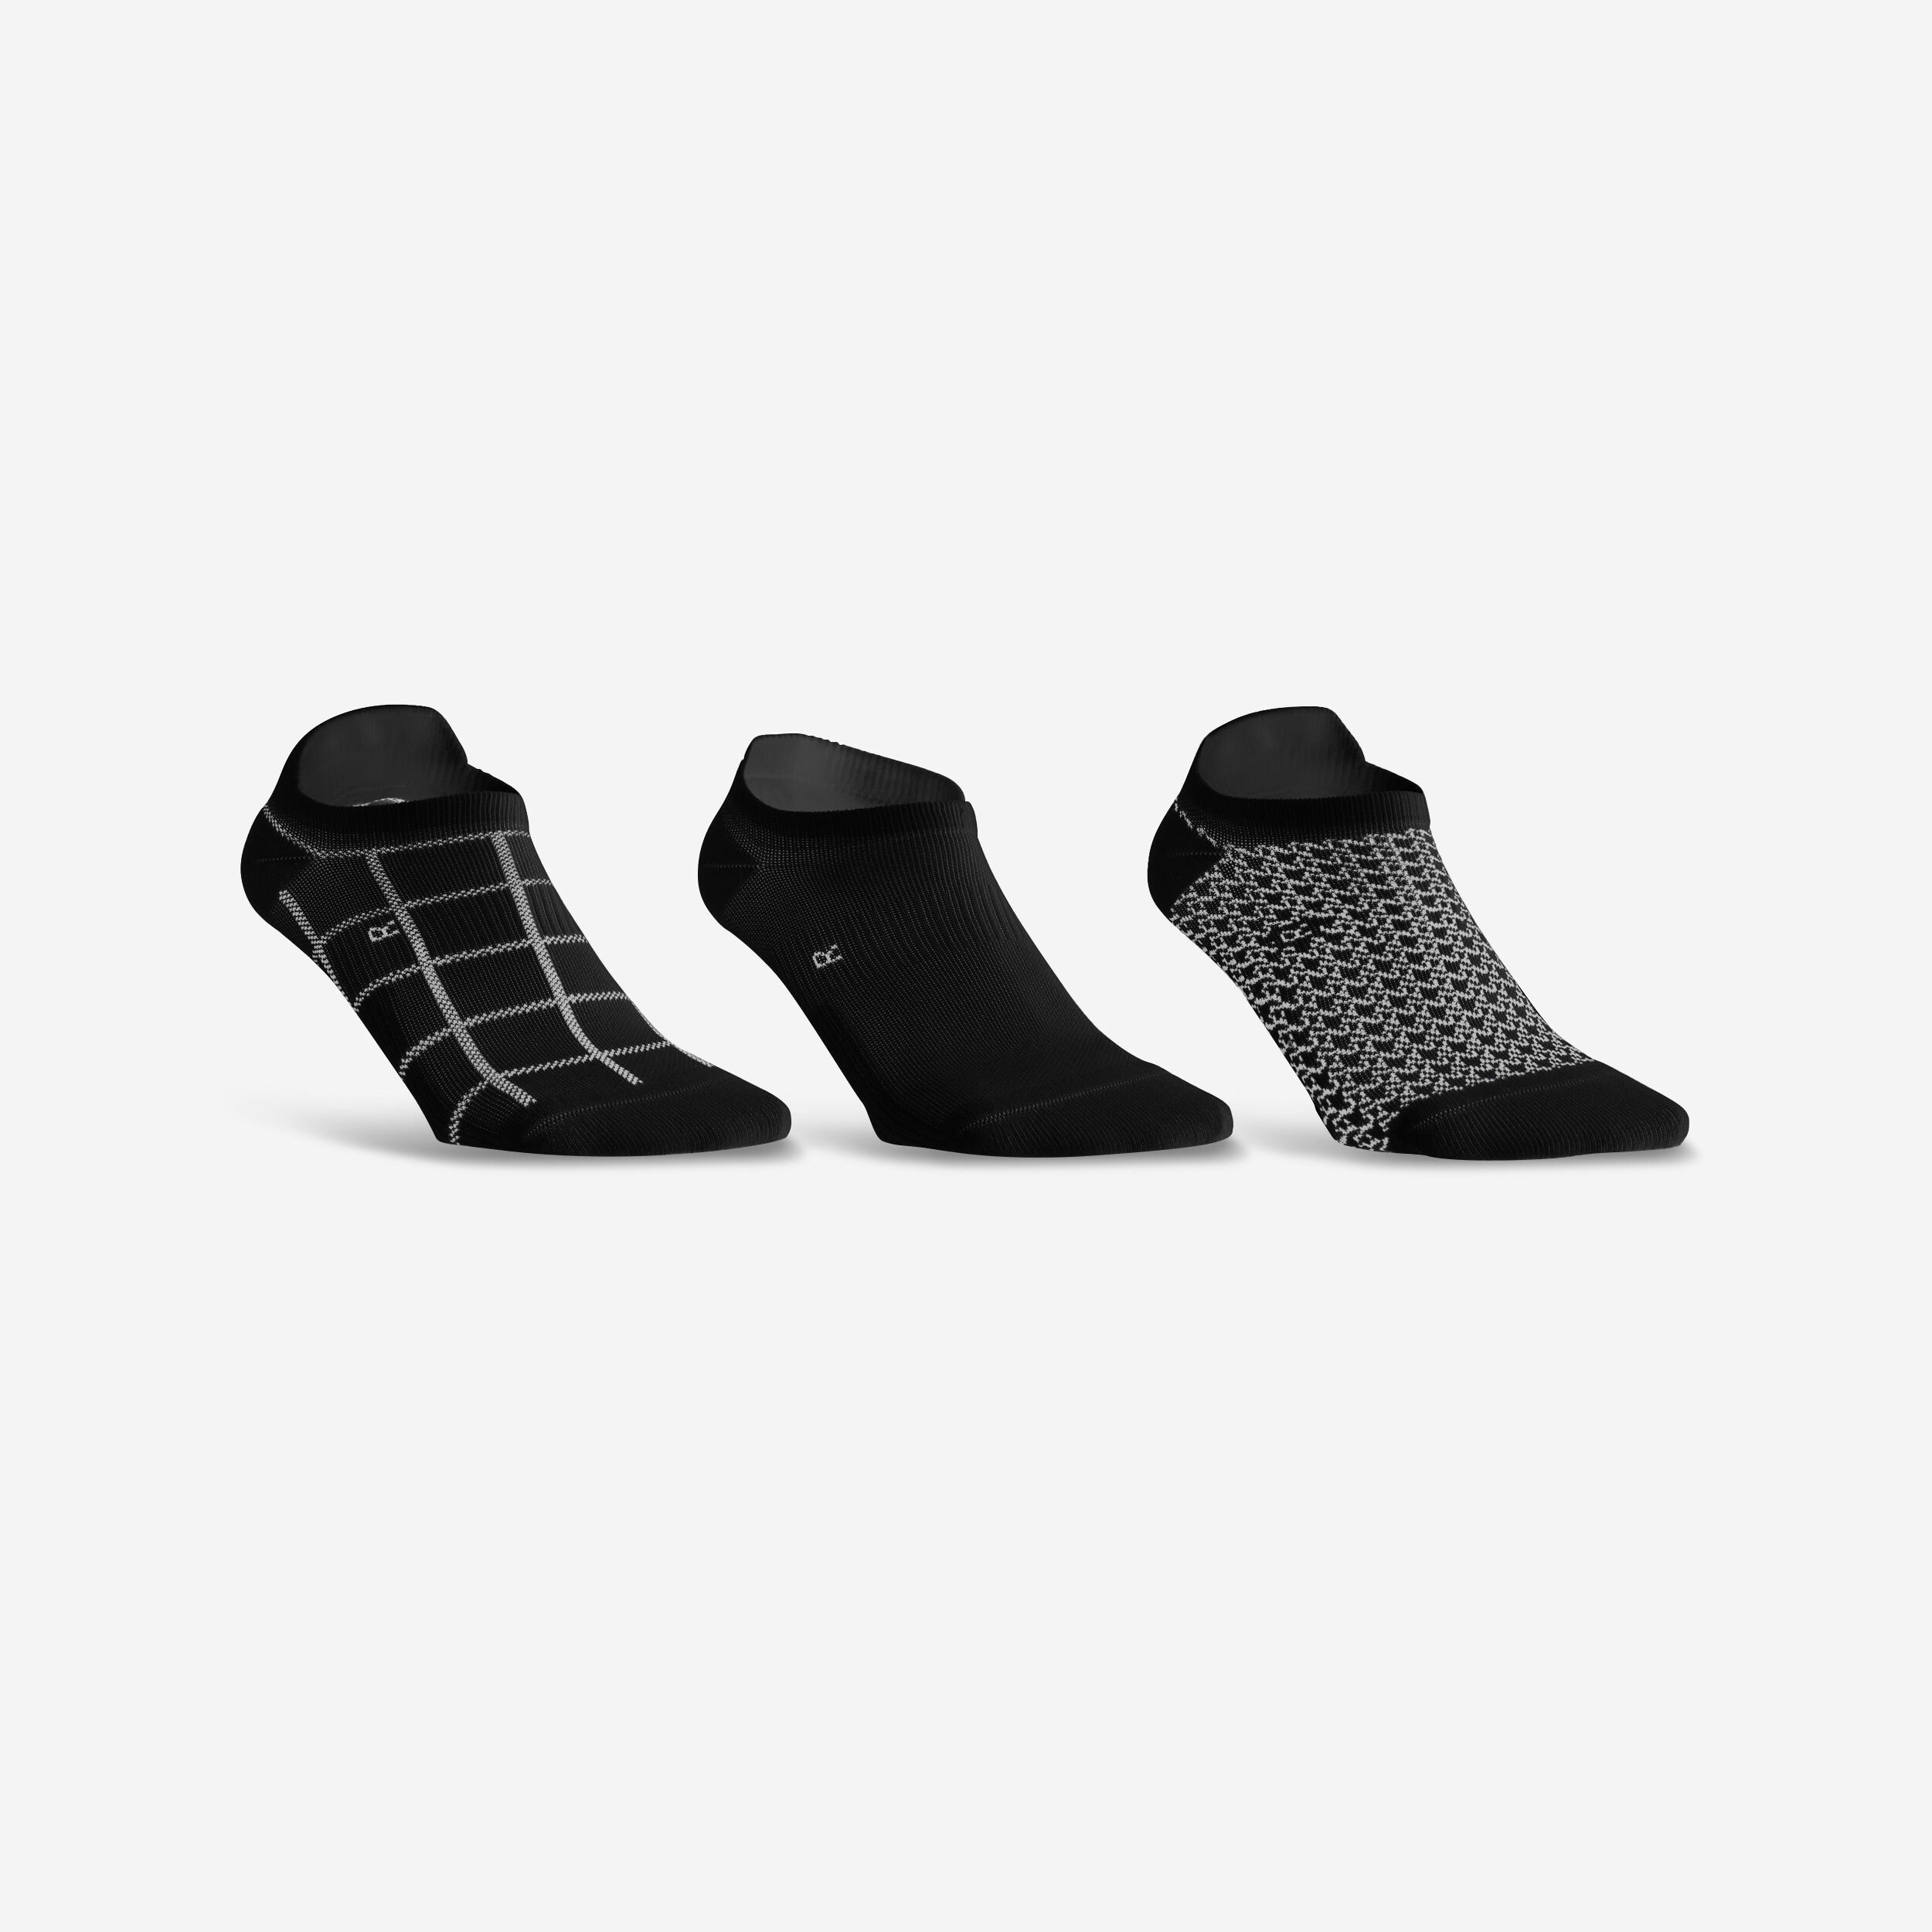 DOMYOS Cardio Fitness Invisible Socks Tri-Pack - Black & White Print